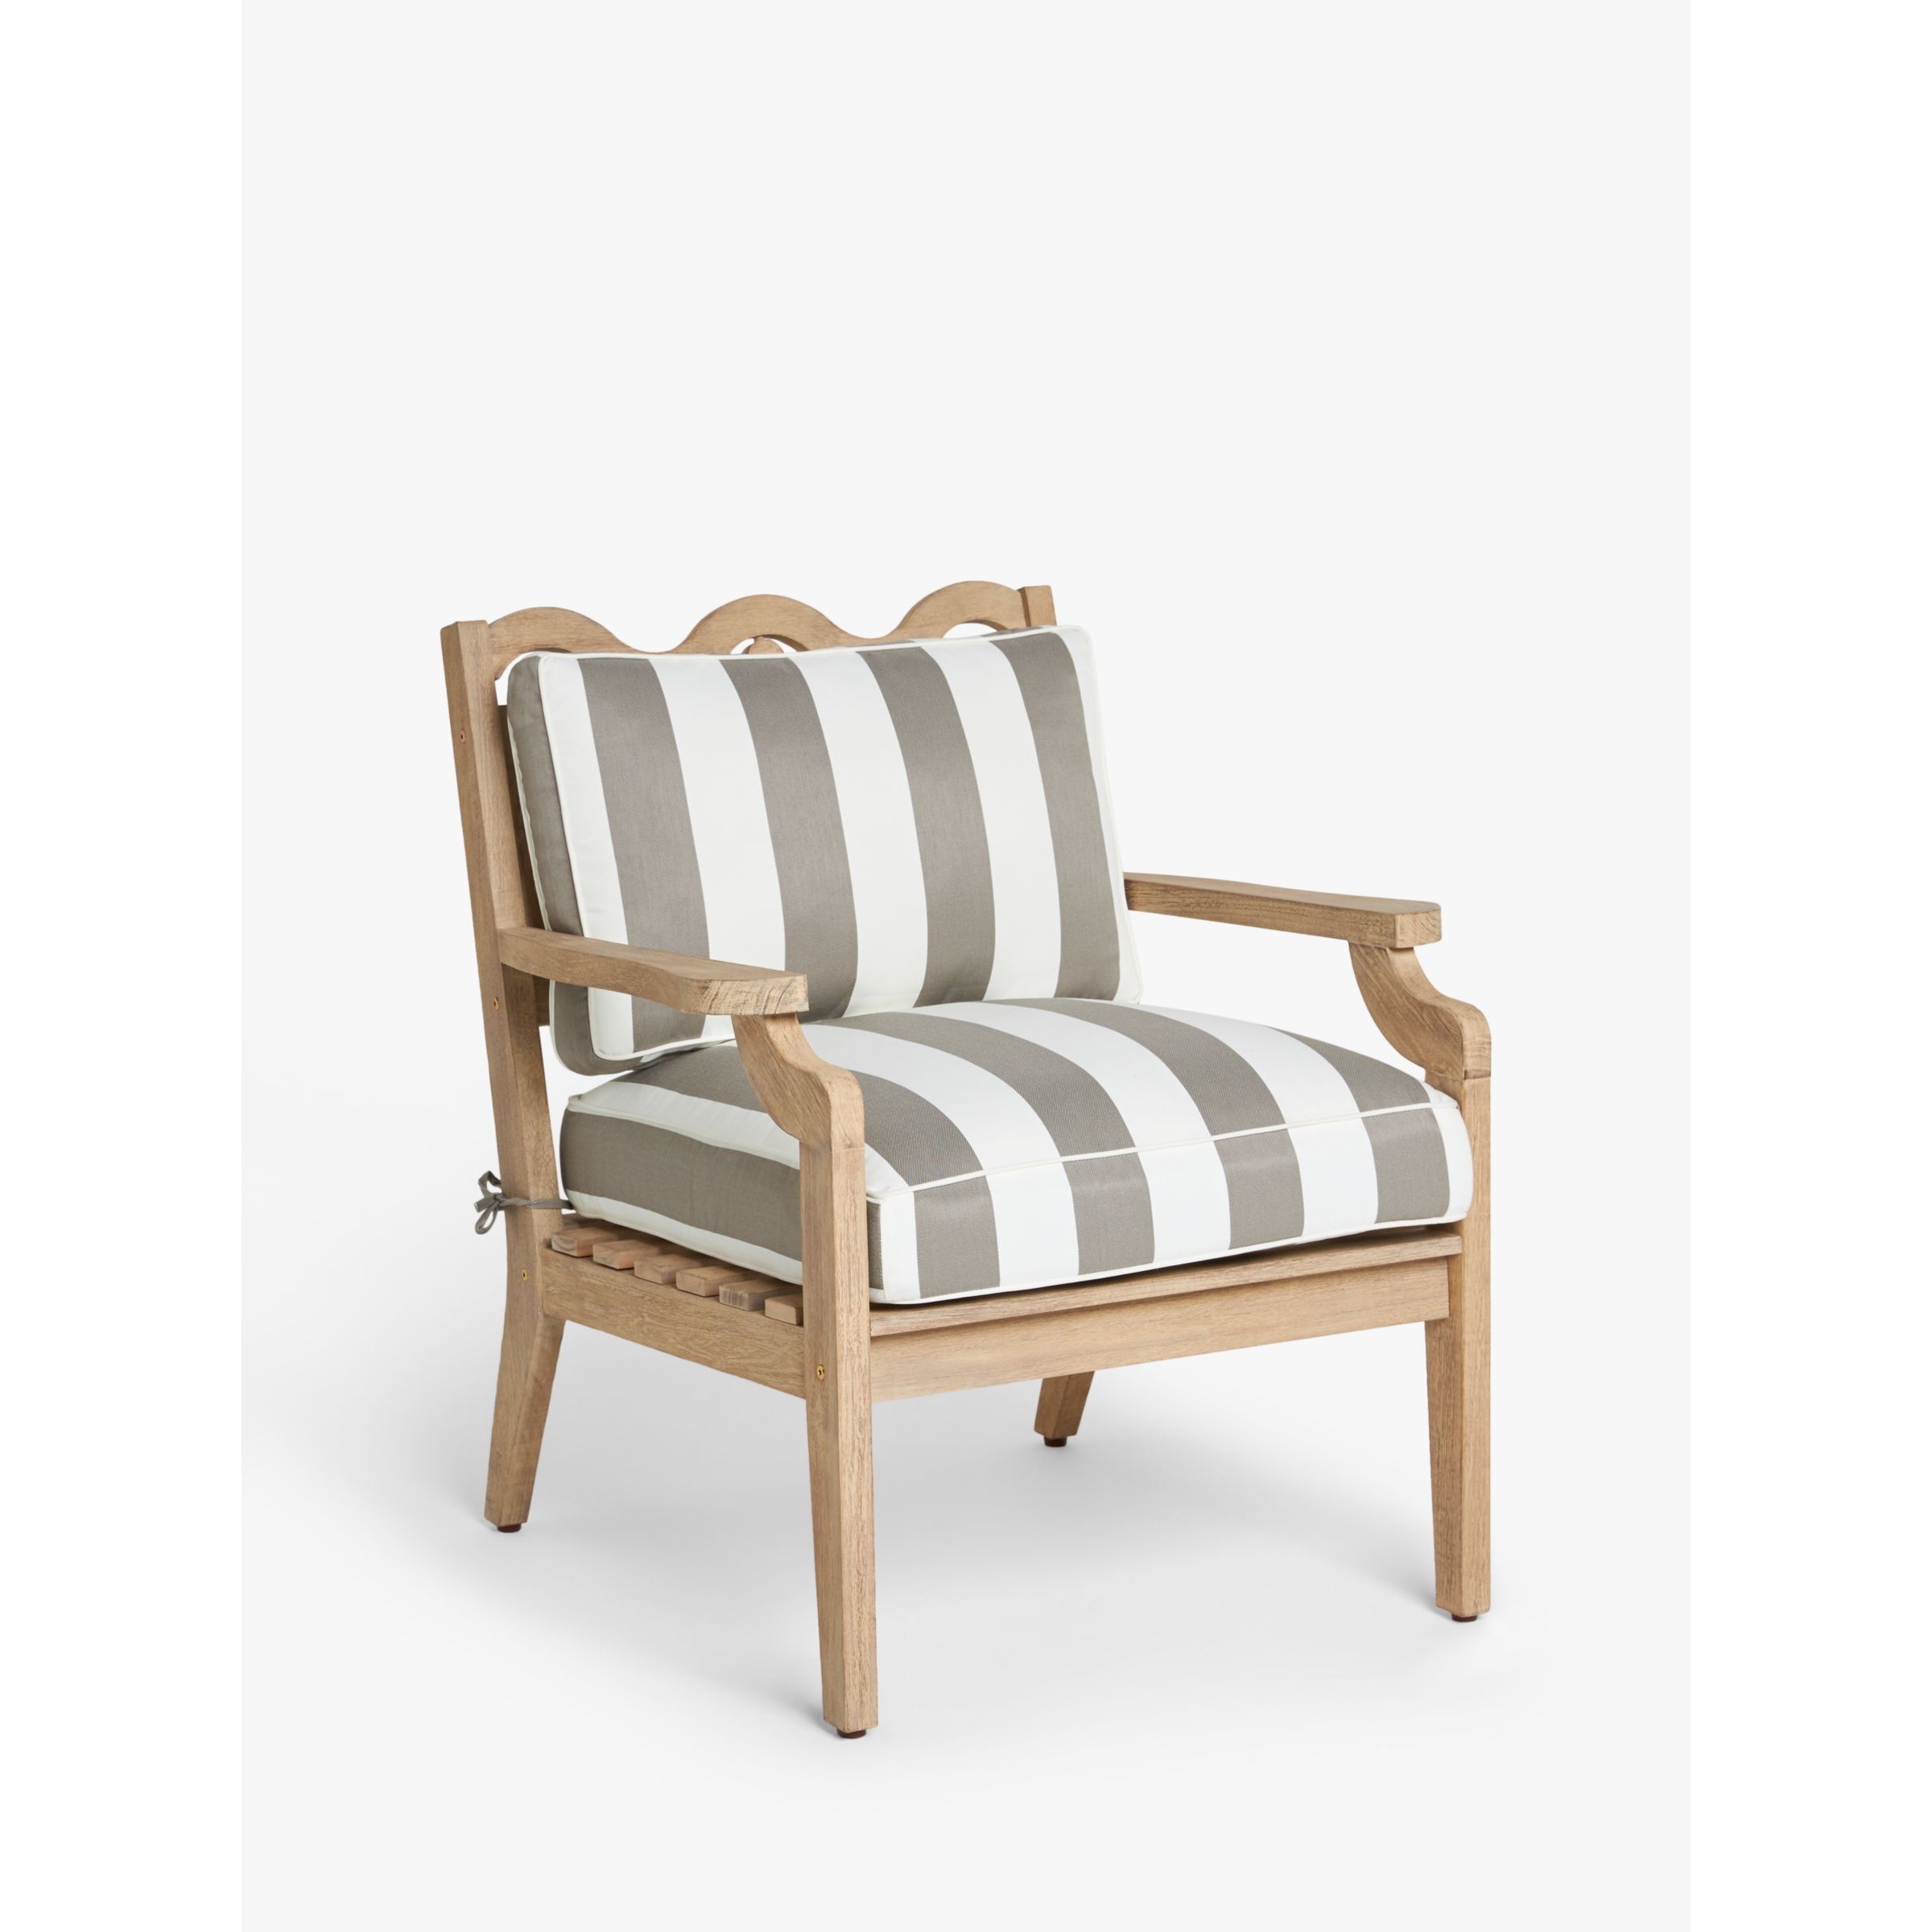 John Lewis Squiggle Garden Lounge Chair, FSC-Certified (Acacia Wood), Natural - image 1